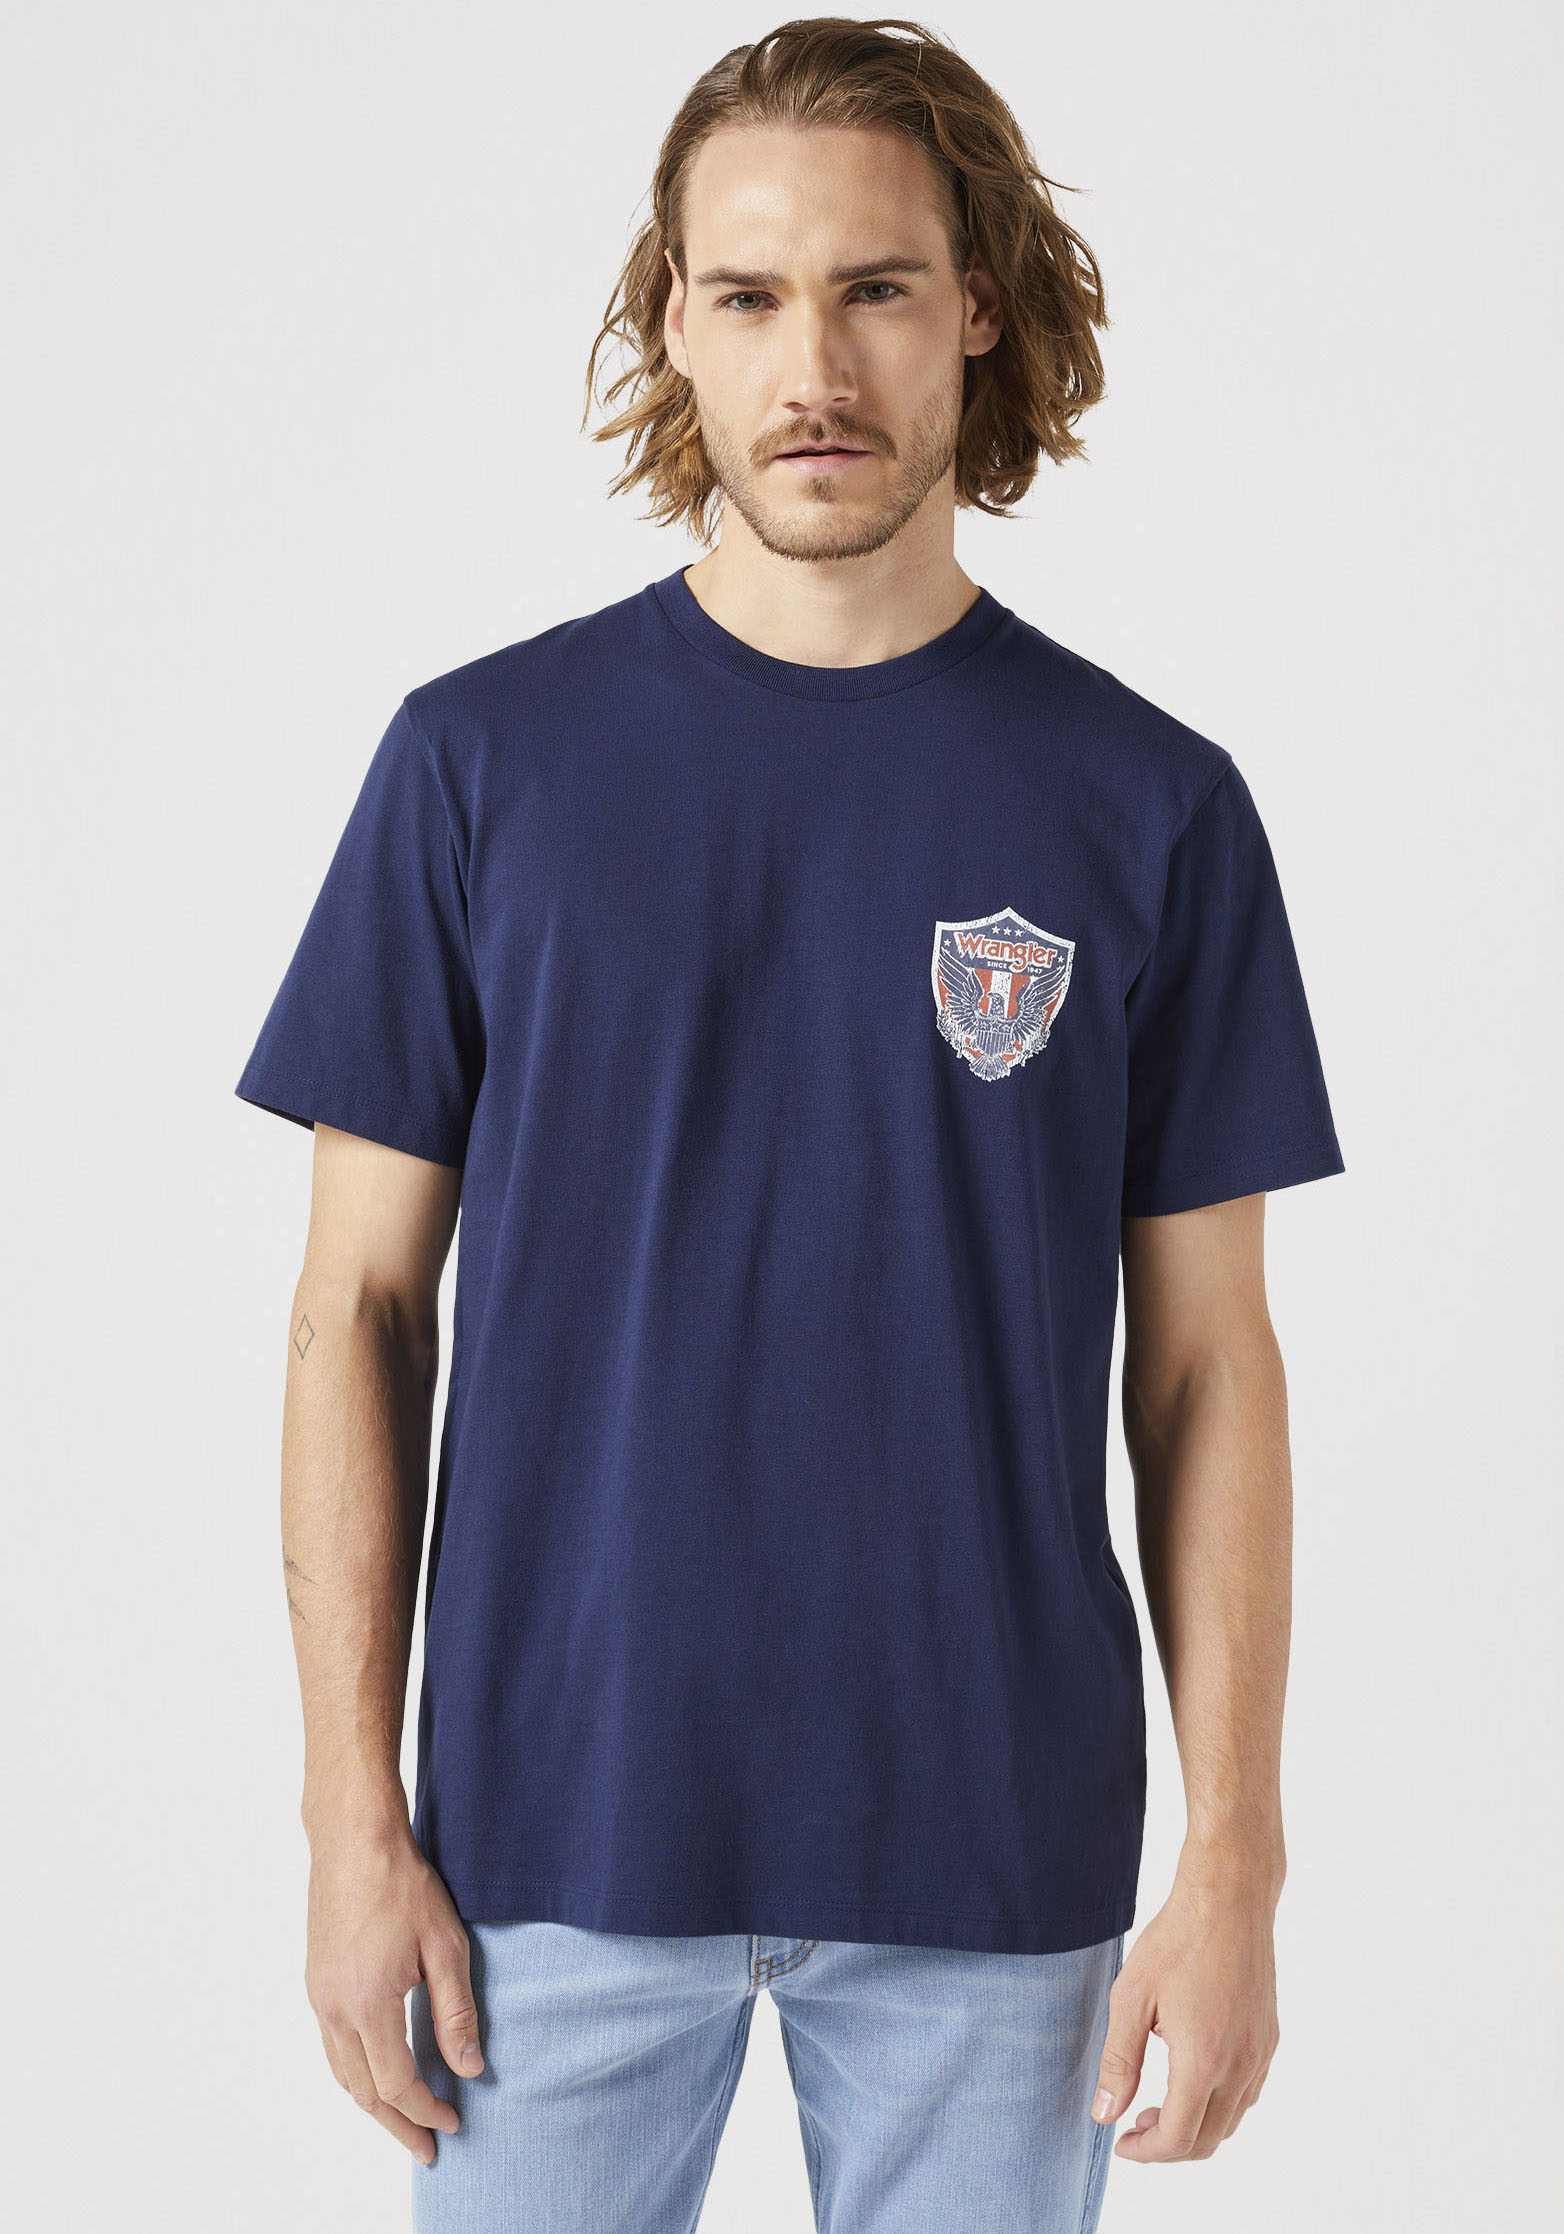 Wrangler T-Shirt »AMERICANA« von Wrangler